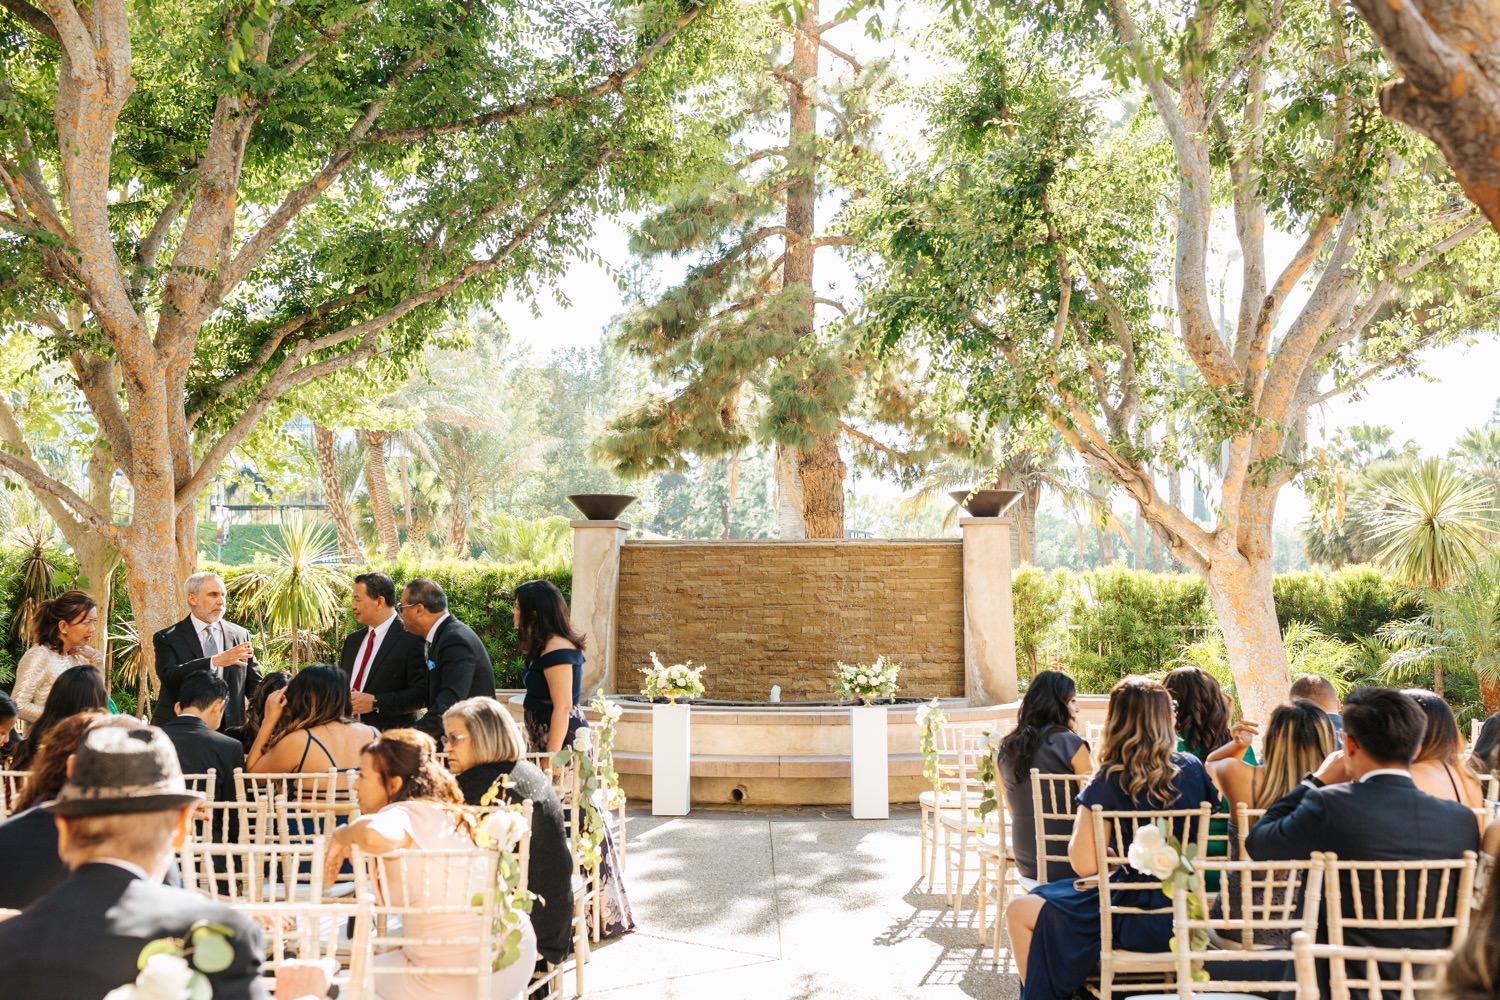 Los Angeles Wedding Ceremony Decor - Wedding Decor Inspiration - https://brittneyhannonphotography.com